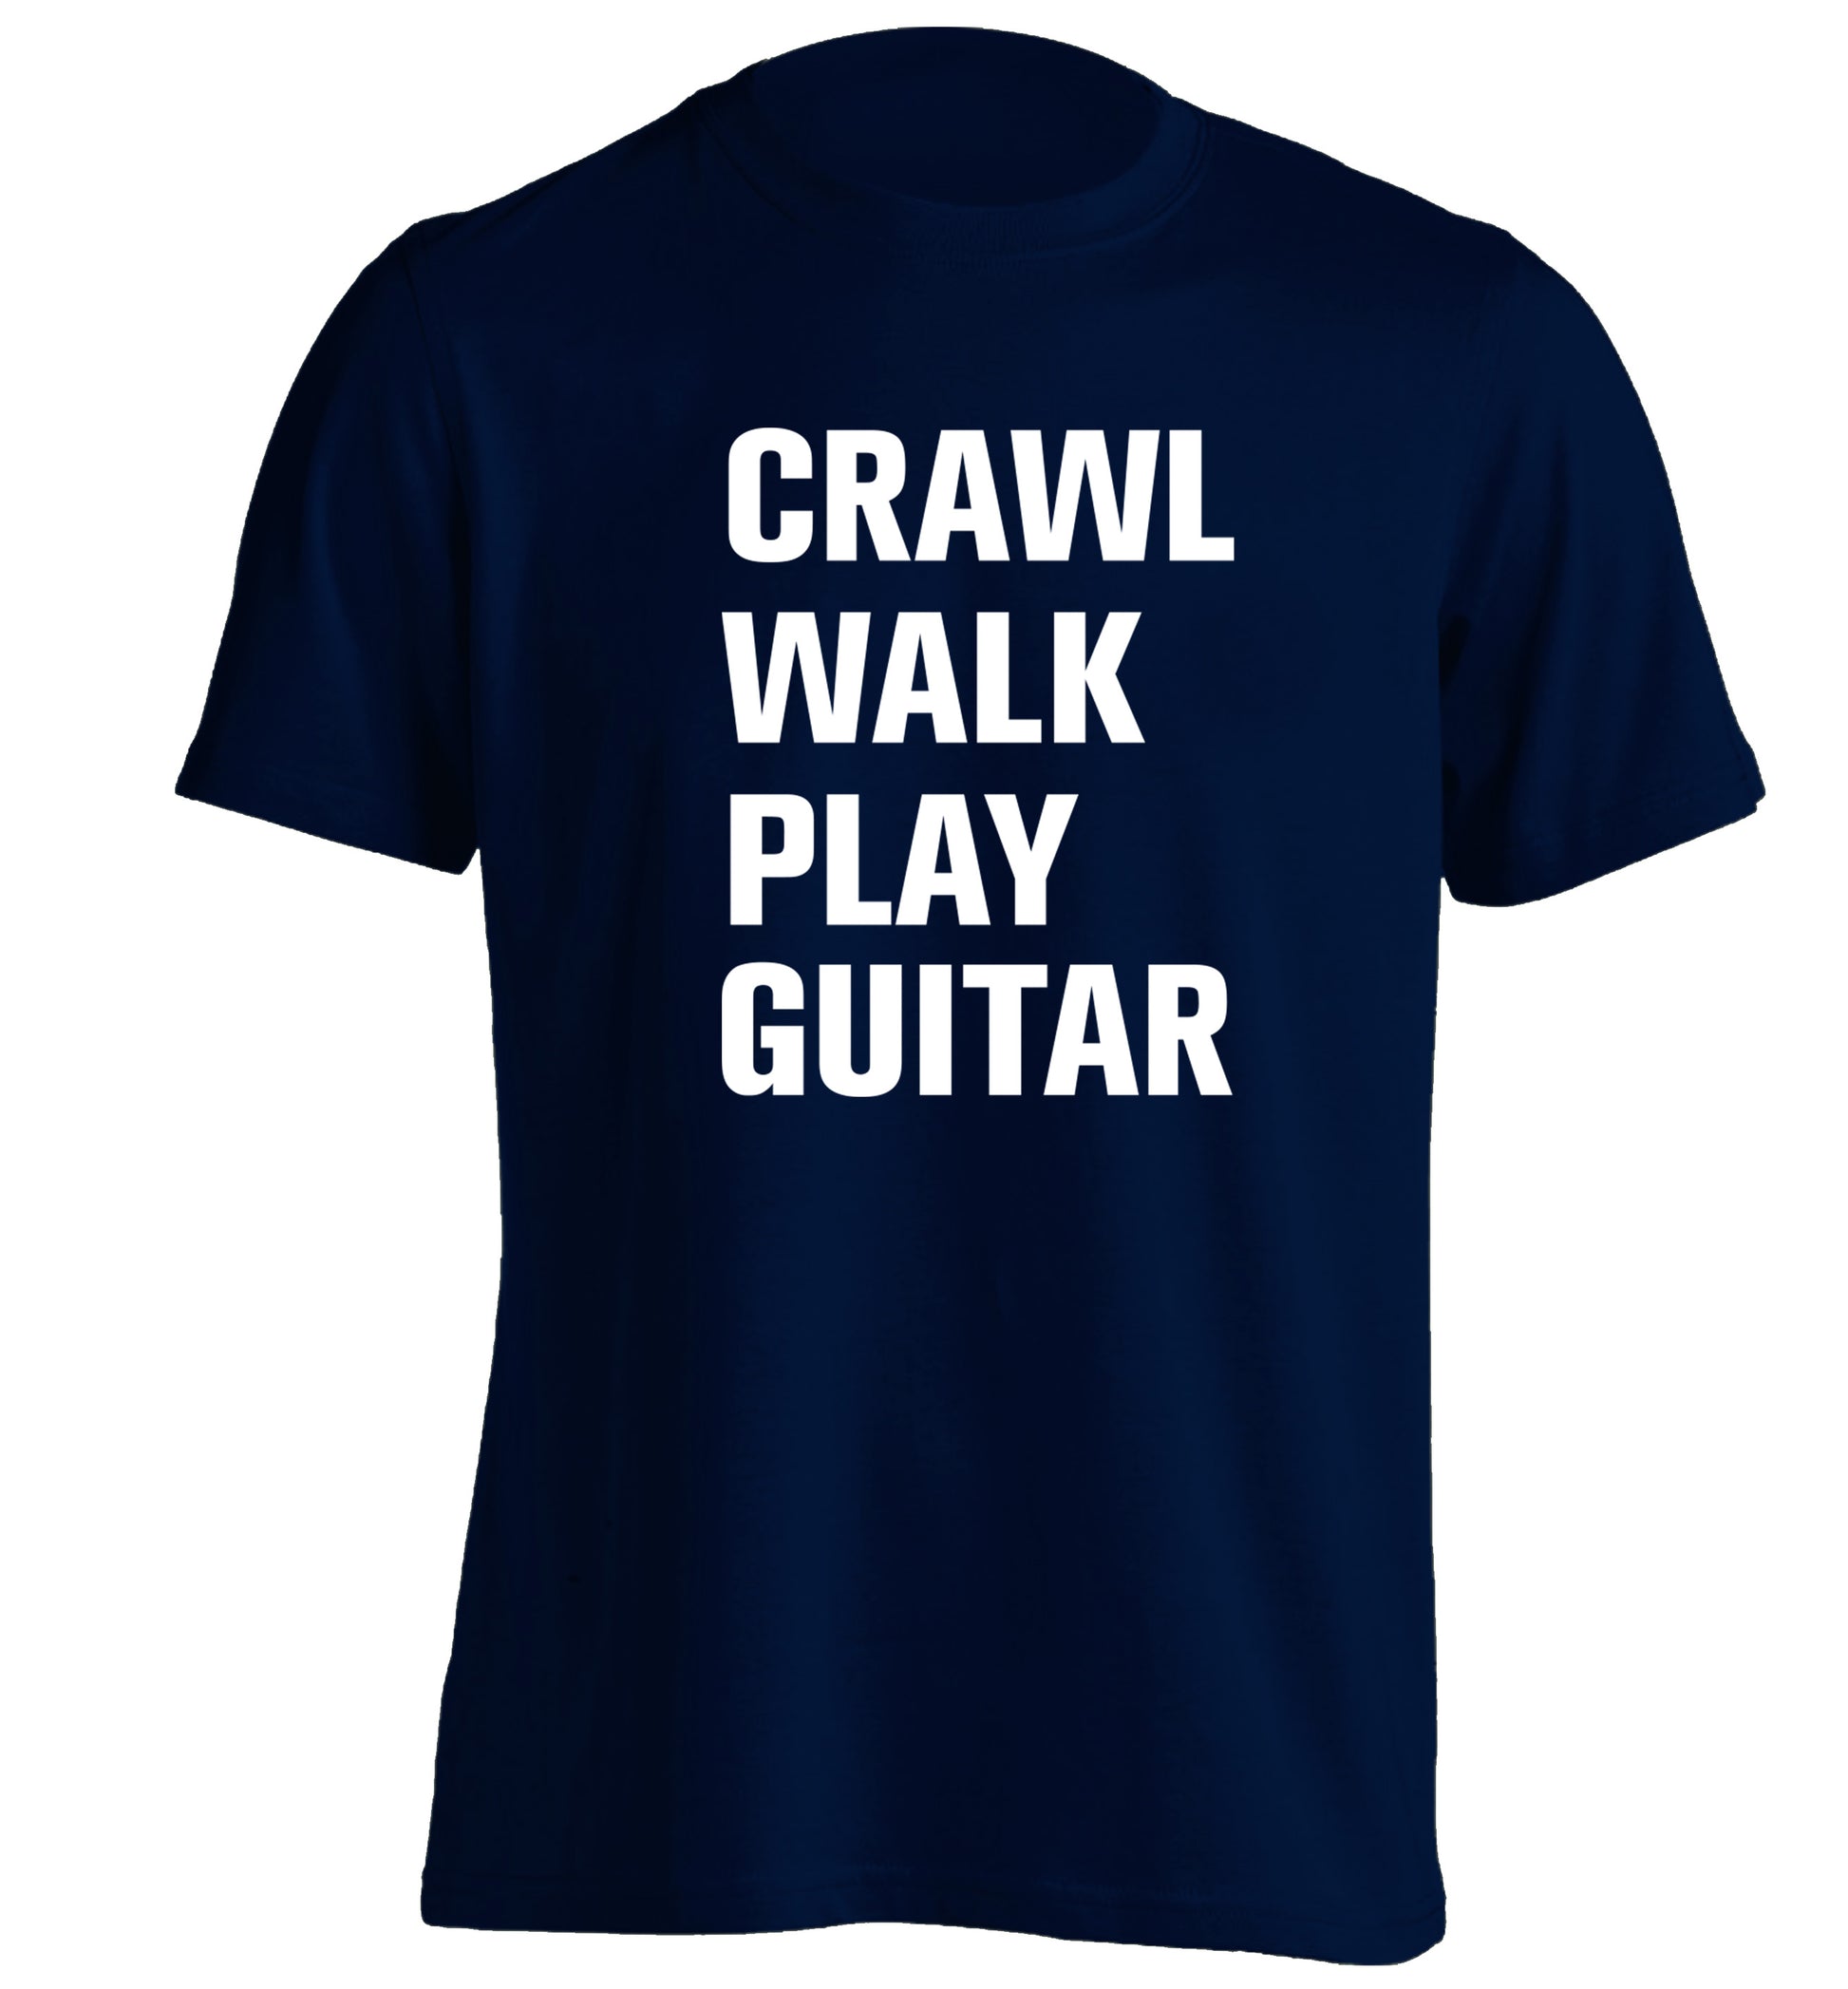 Crawl walk play guitar adults unisex navy Tshirt 2XL